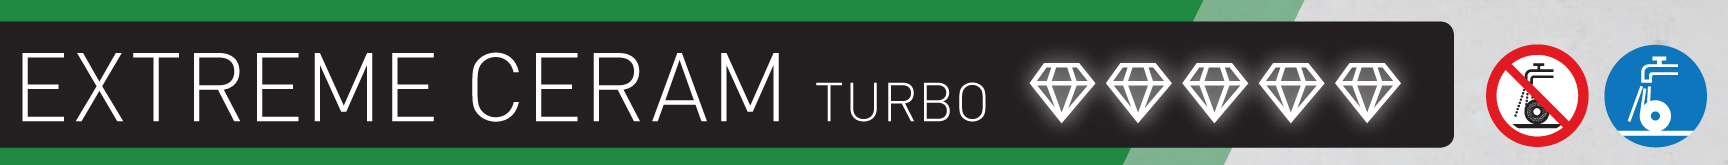 EXTREME-CERAM-Turbo-Titel